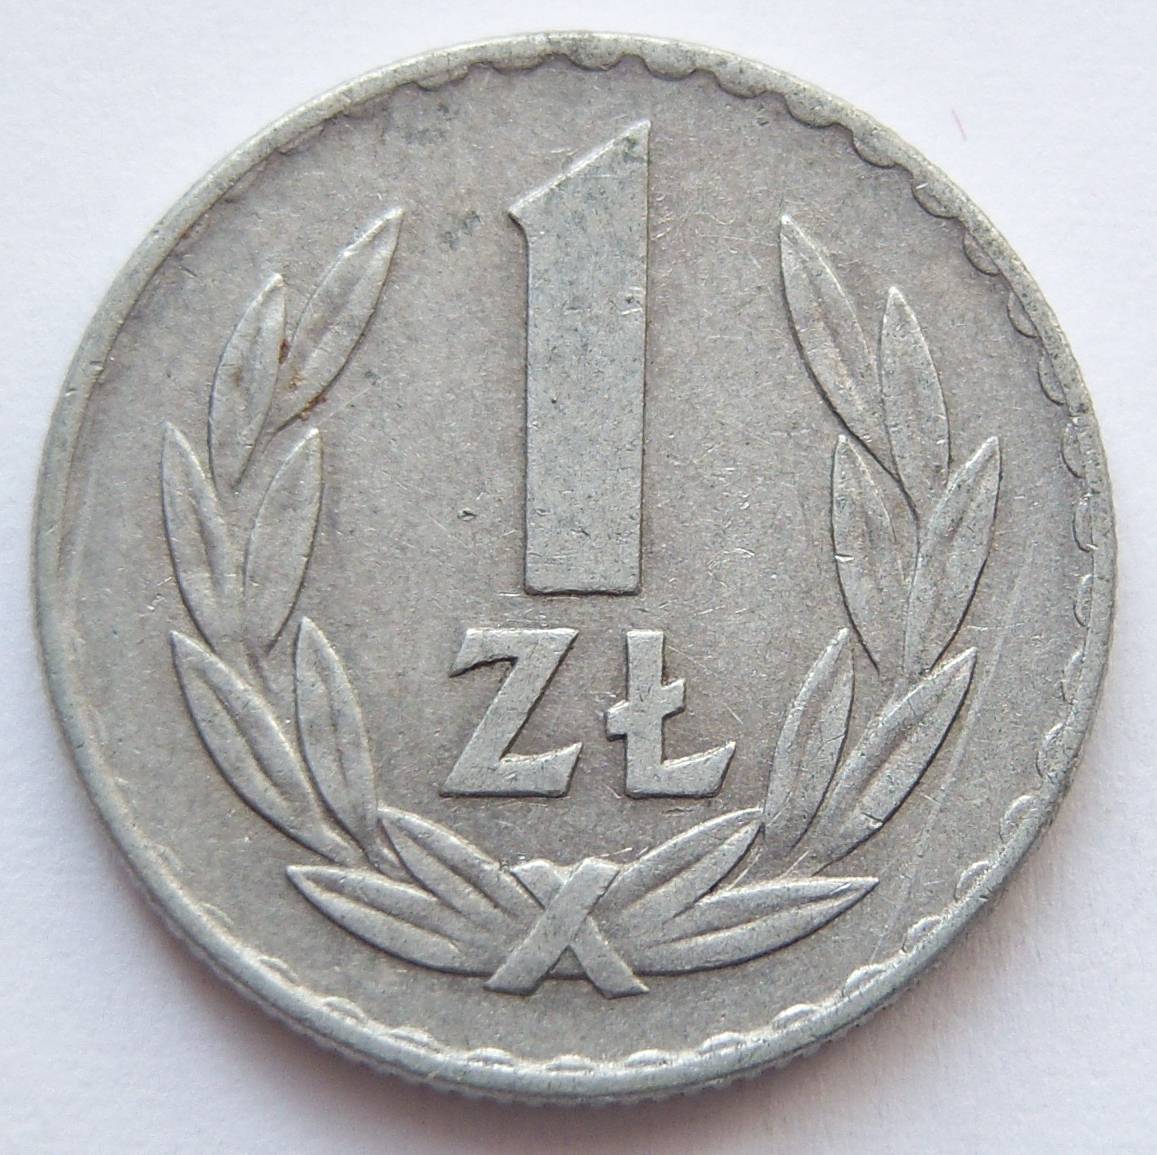  Polen 1 Zloty 1970 Alu   